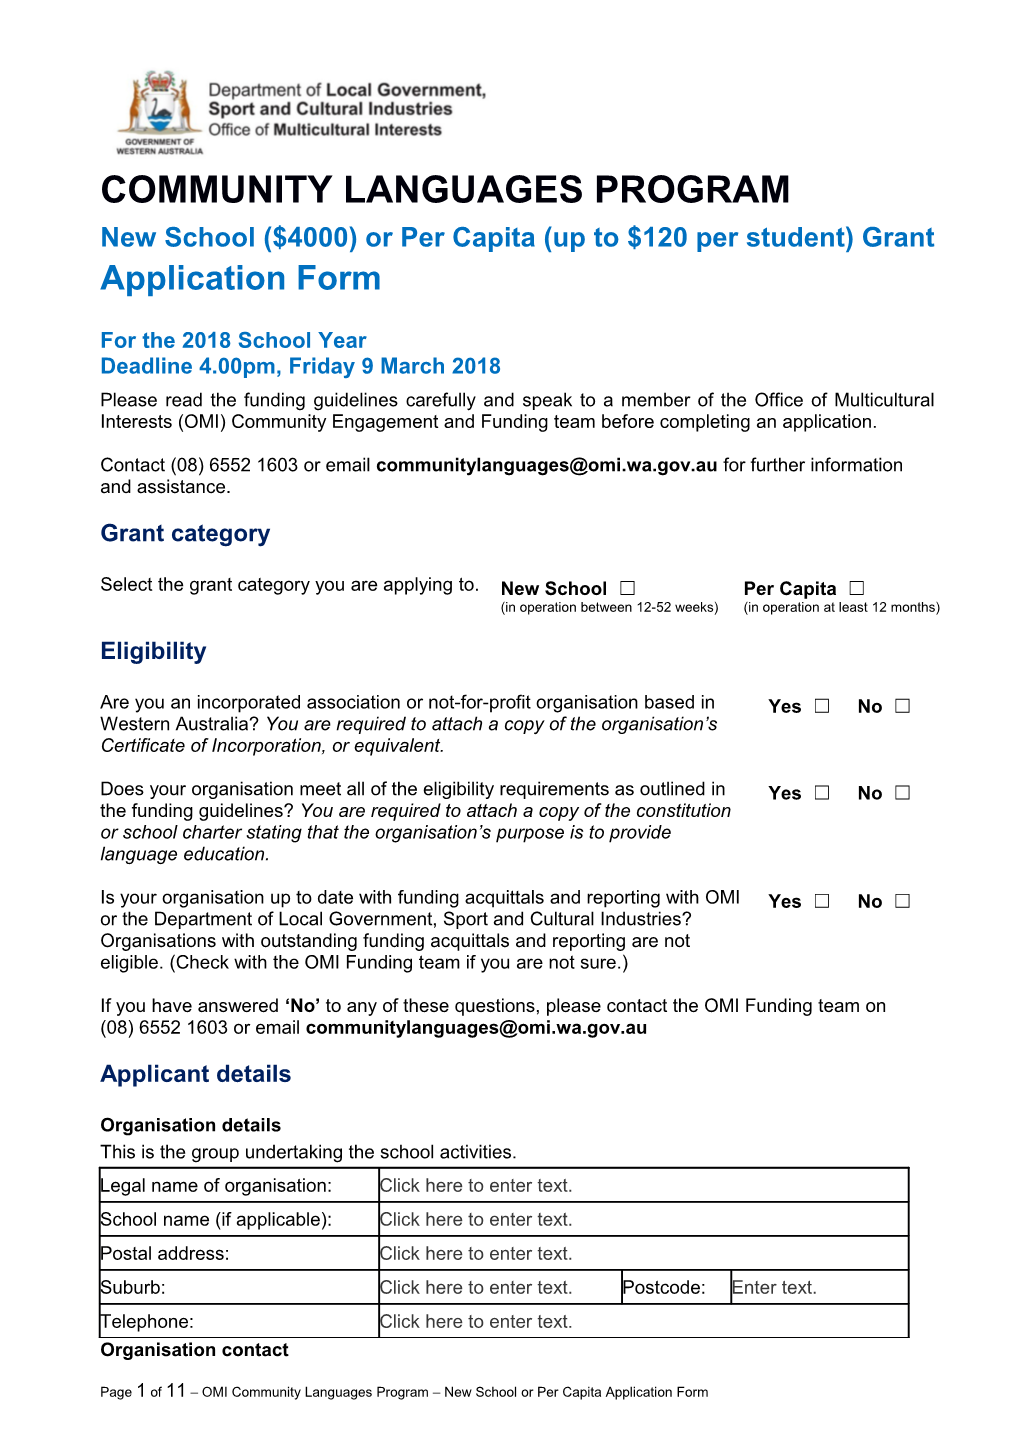 New School ($4000) Or Per Capita(Up to $120 Per Student) Grant